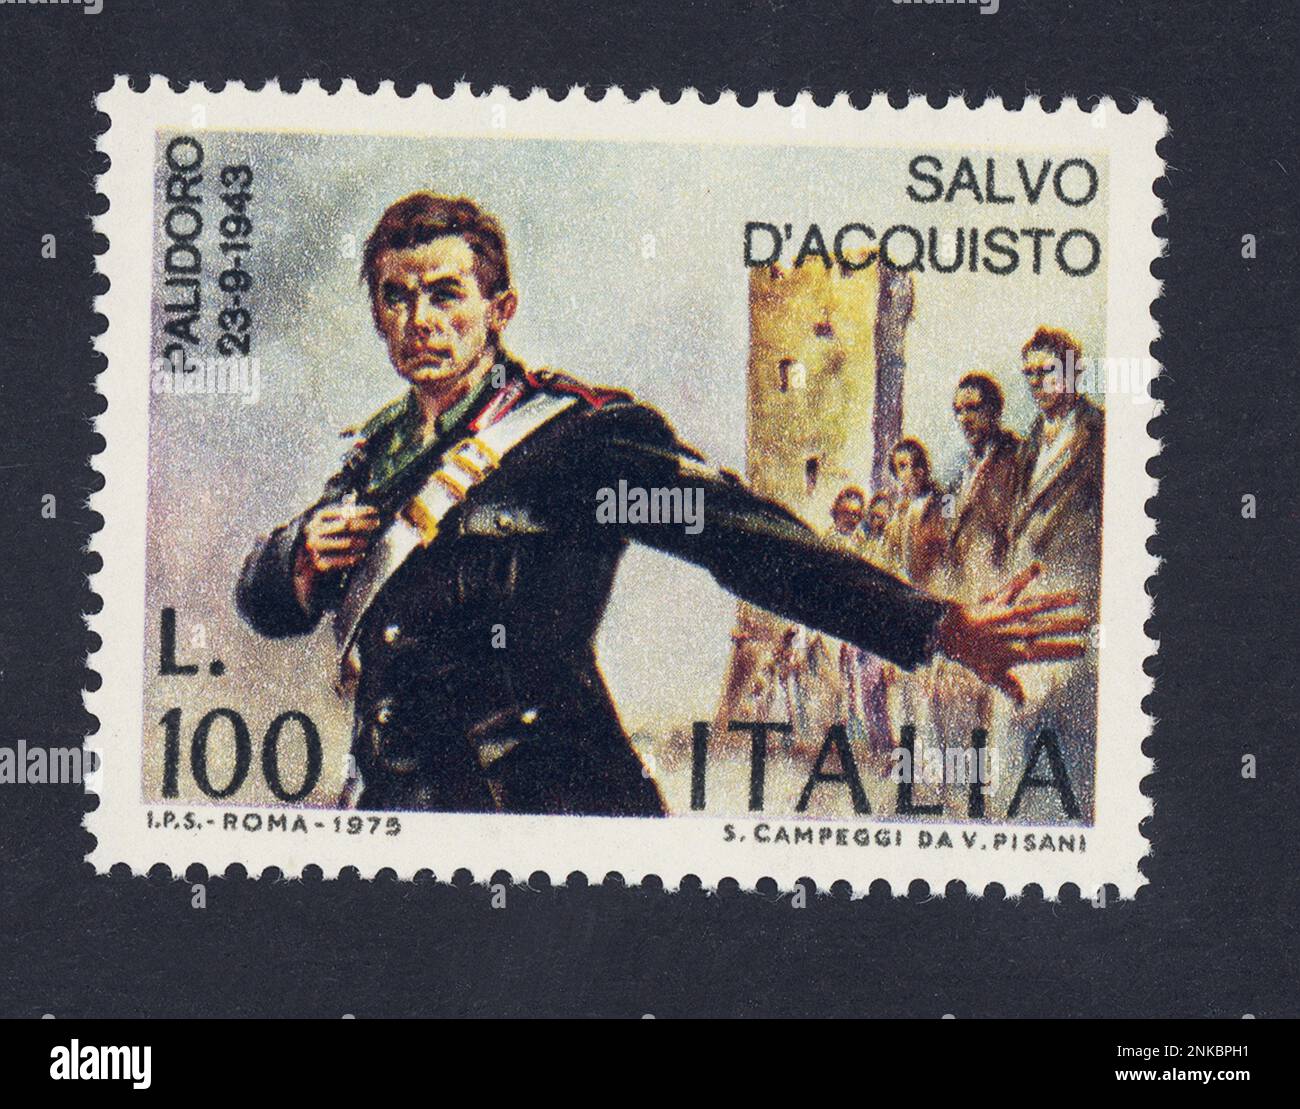 1973 , ITALIEN : der italienische Held der Carabiniere SALVO D'ACQUISTO . Post Stamp Timber vom italienischen Postdienst 1973 - RESISTENZA - CARABINIERI - Poste italiane - Martire - francobollo commemorativo --- Archivio GBB Stockfoto